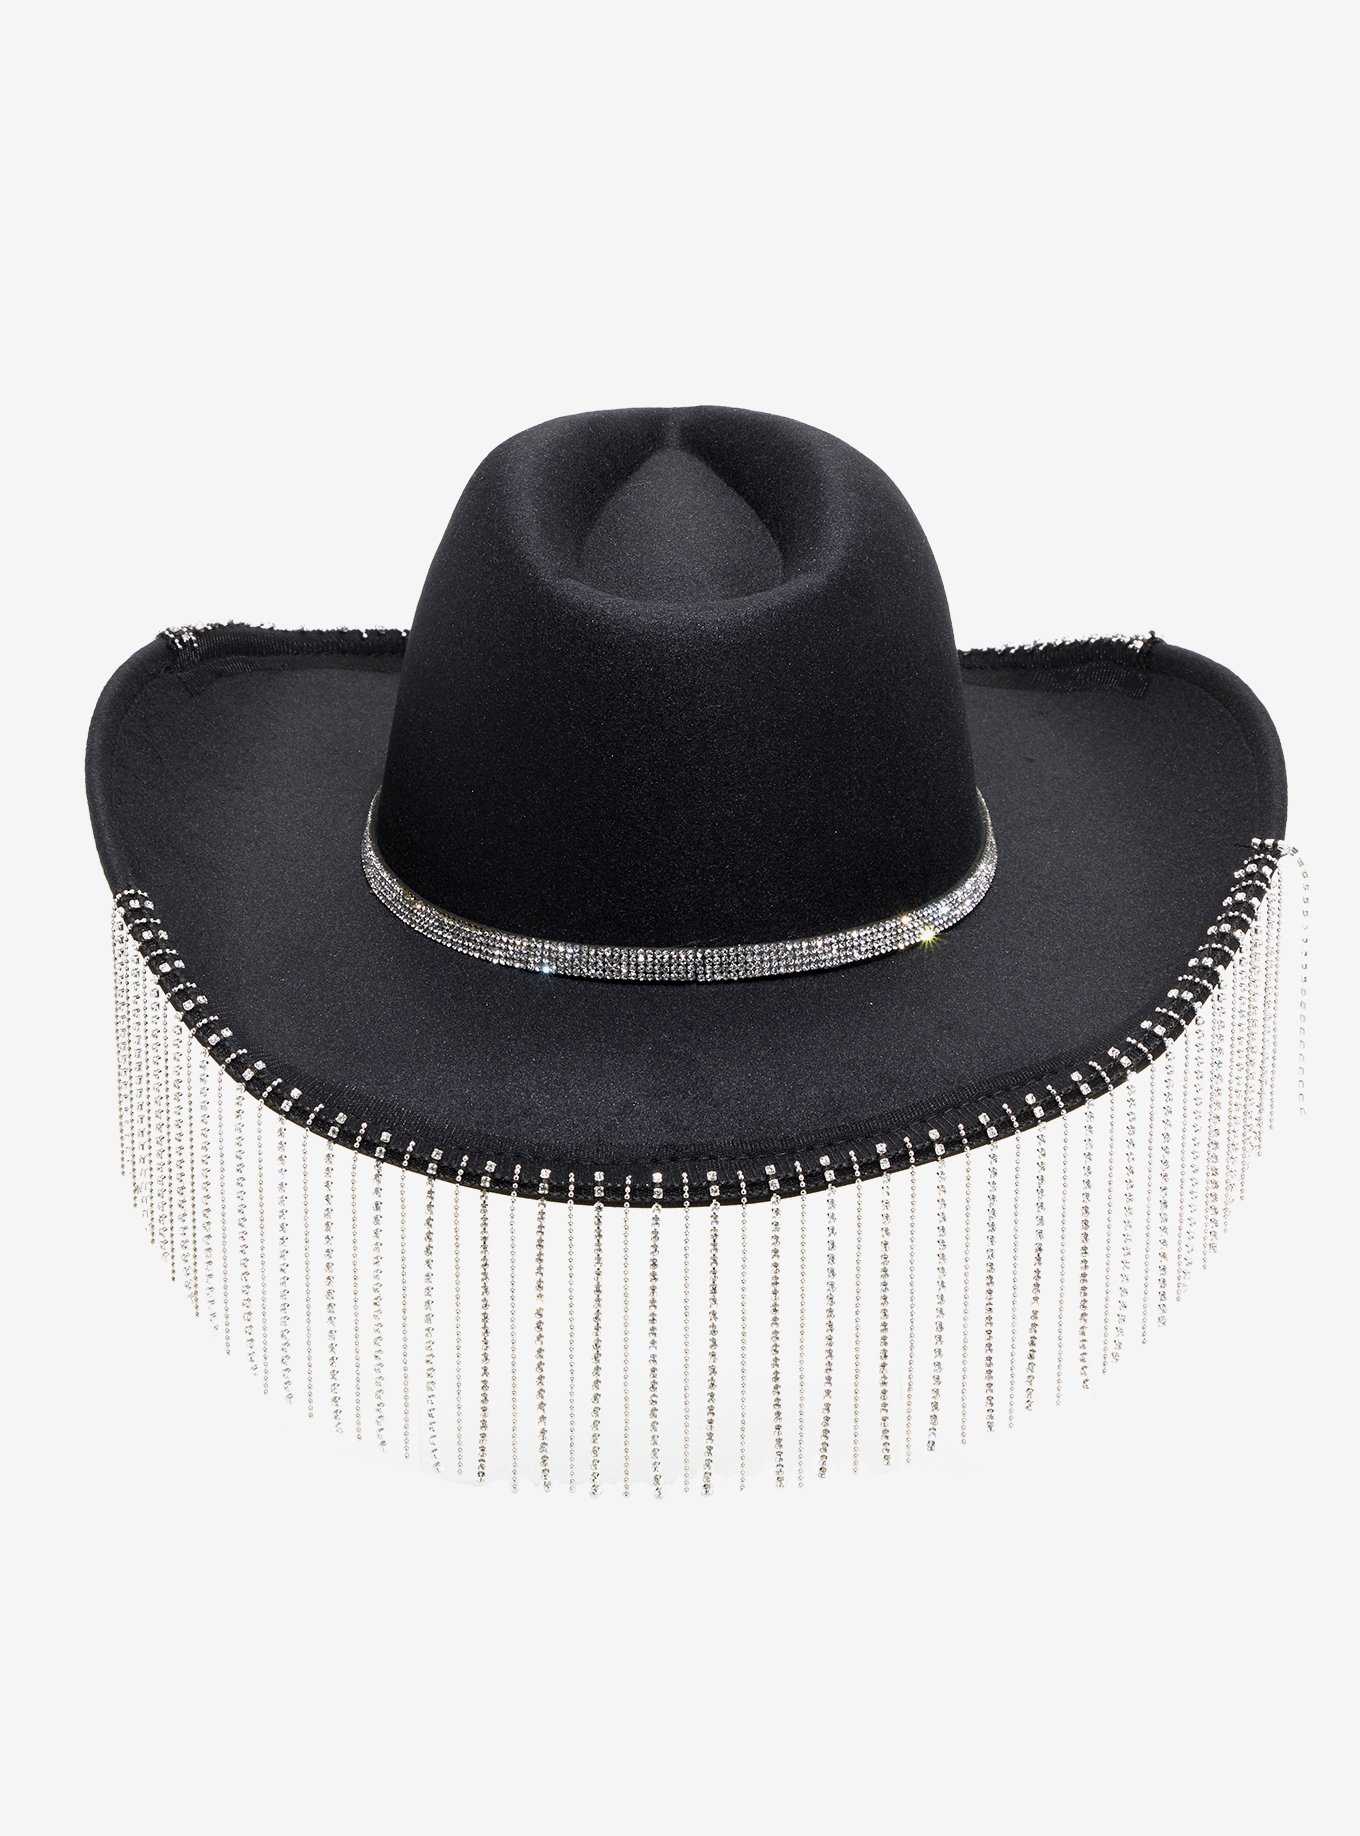 Black Rhinestone Fringe Cowboy Hat, , hi-res